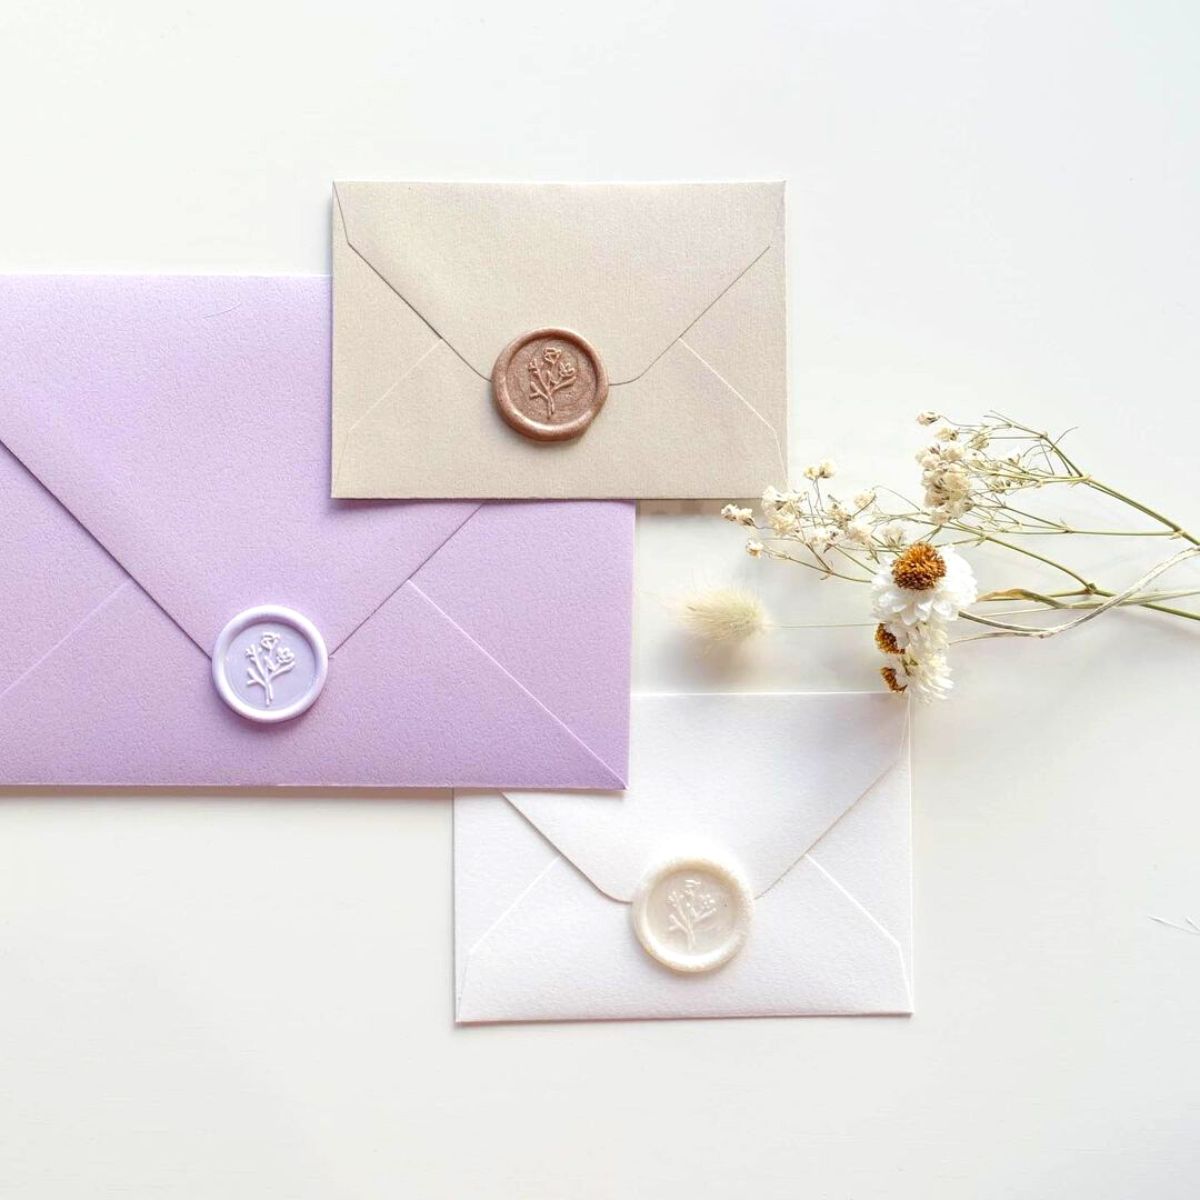 Pastel lavender flower design with wax stamp